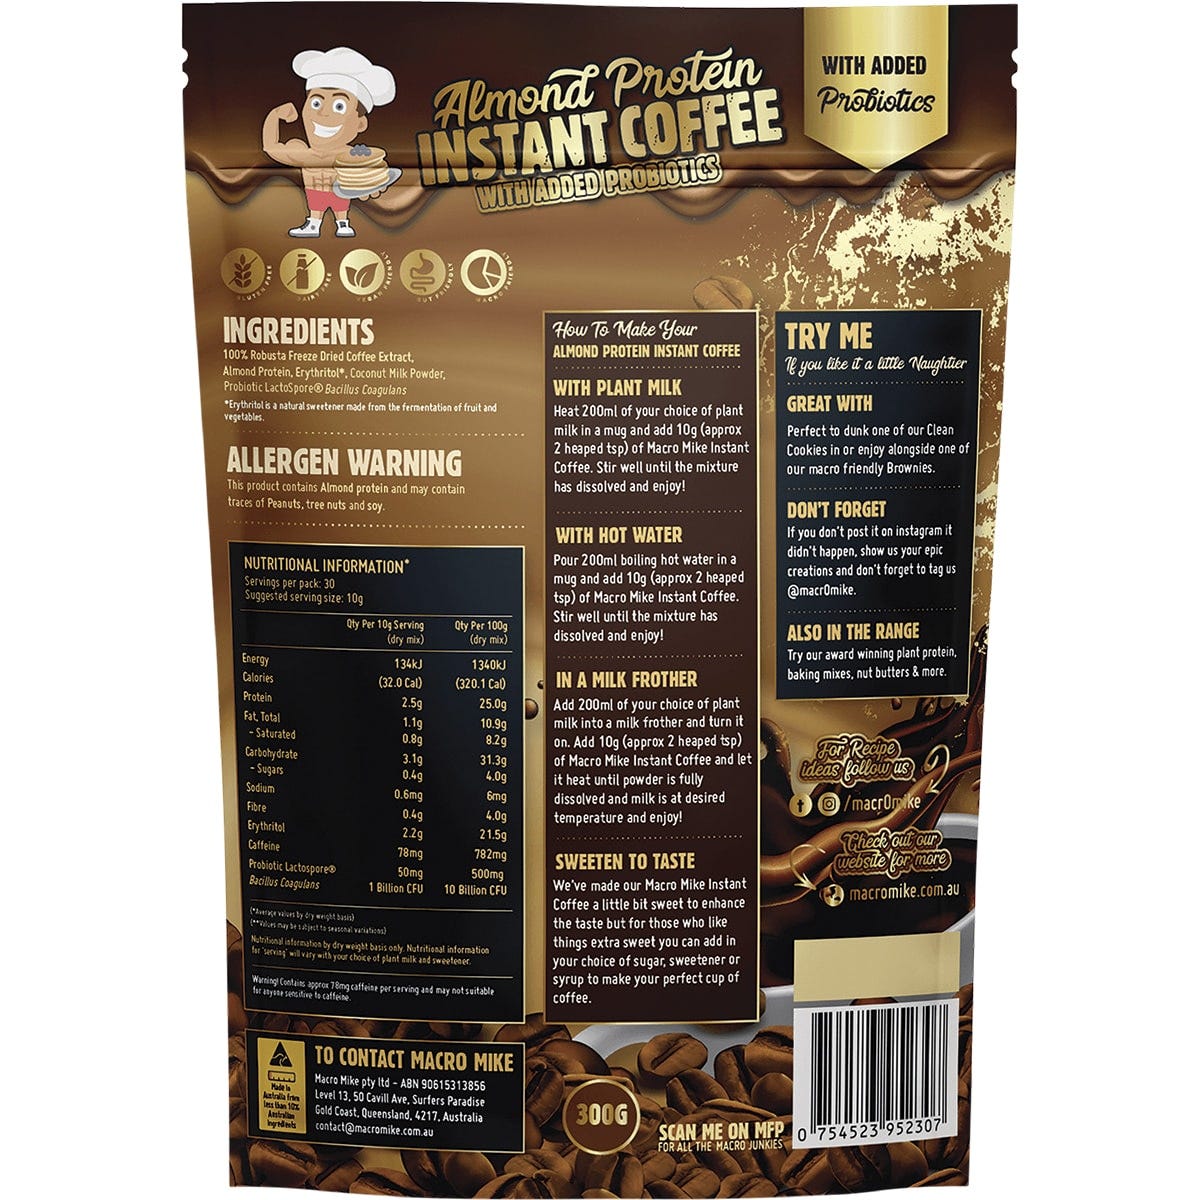 Macro Mike Premium Almond Protein Instant Coffee